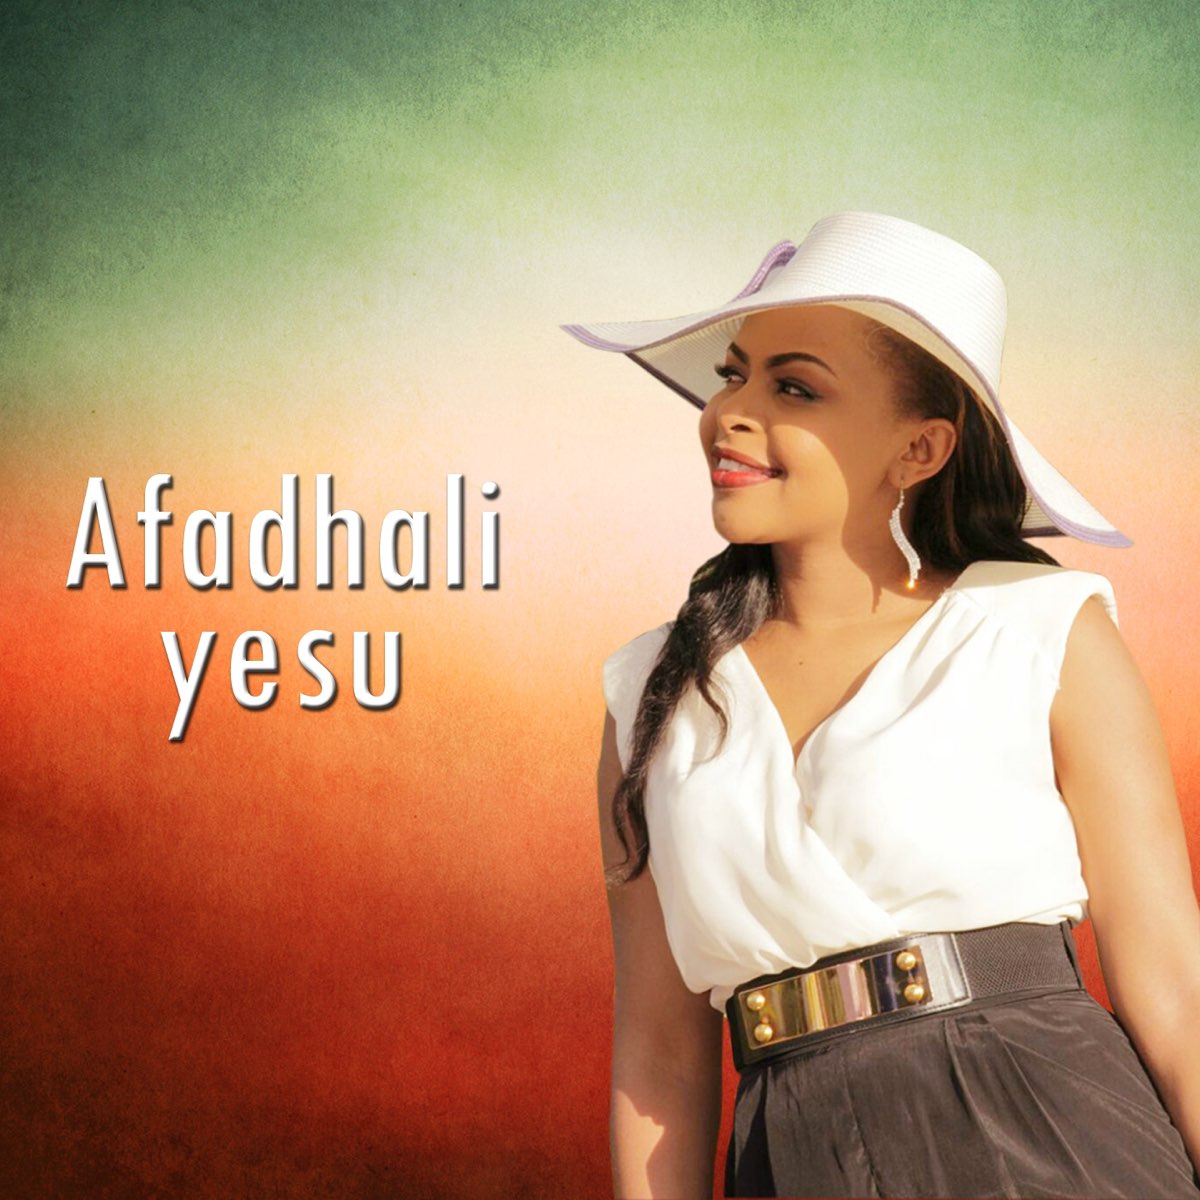 Afadhali Yesu - Single - Album by Size 8 - Apple Music